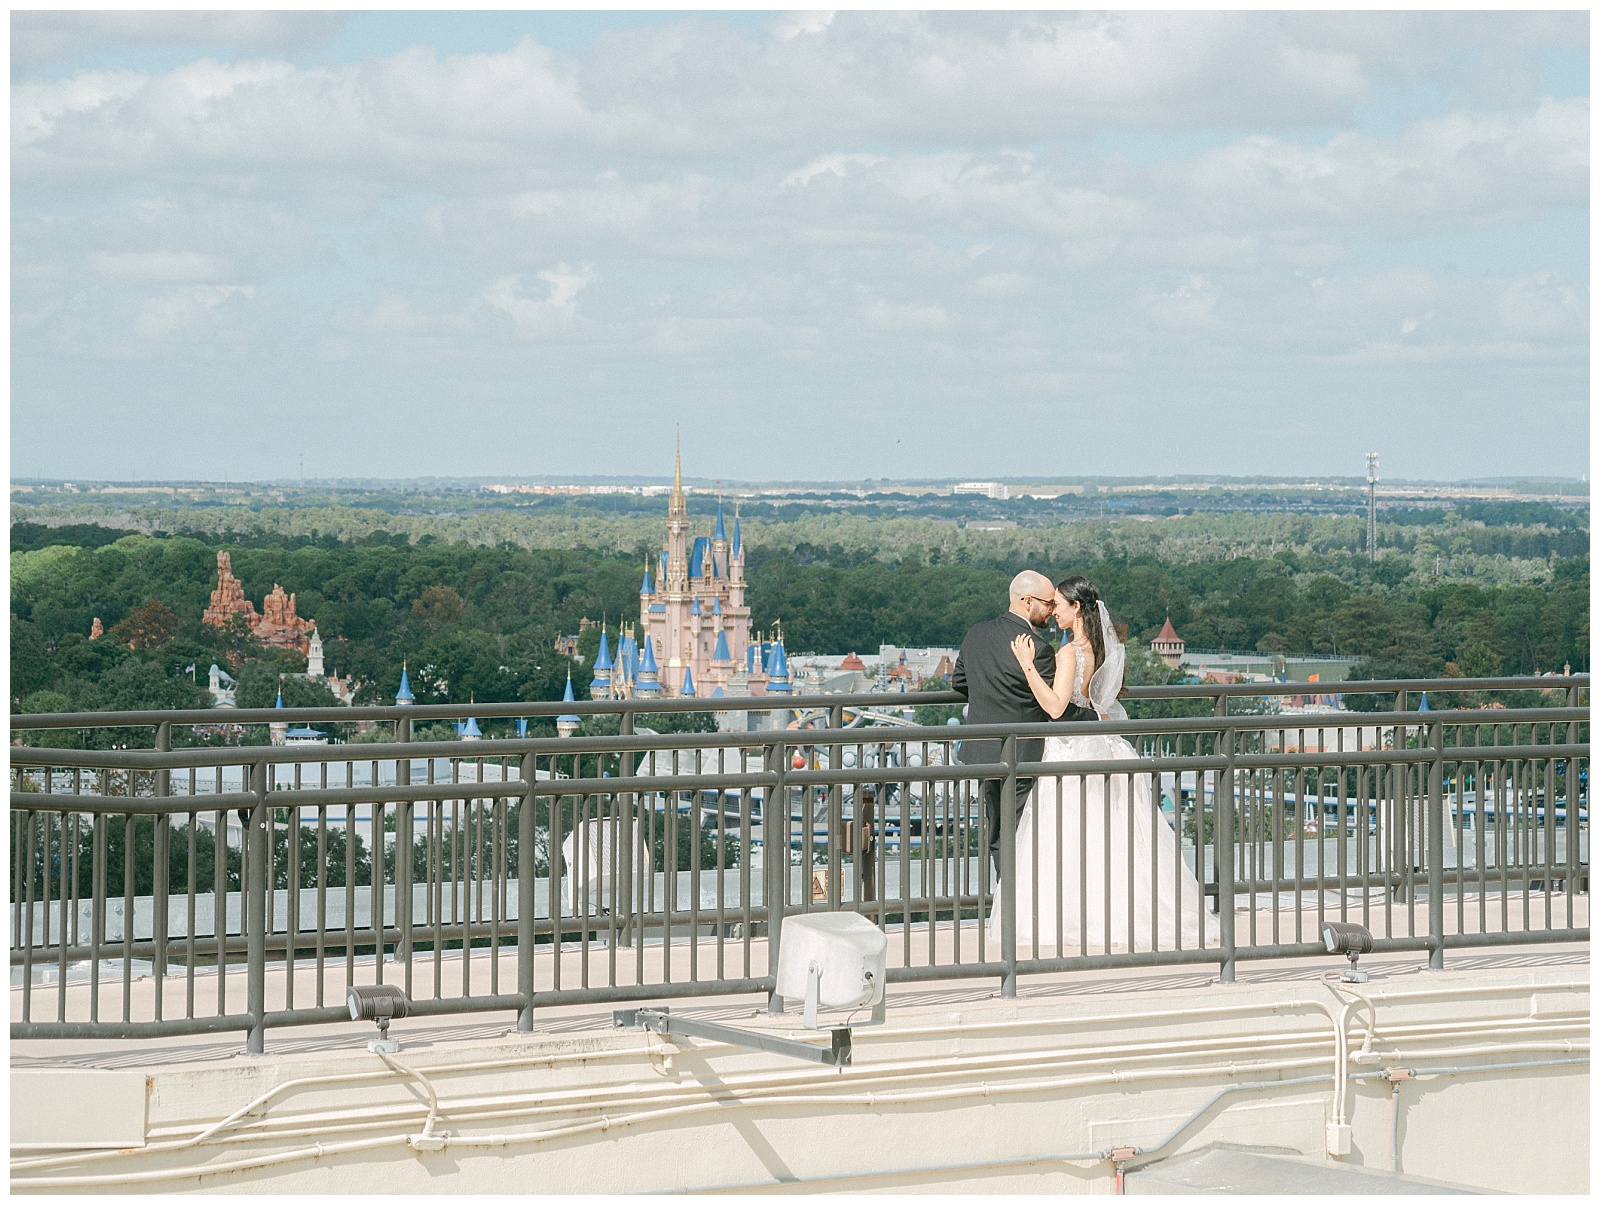 Sky bridge wedding reception photographs at the California Gill by Elizabeth Kane in Orlando Florida